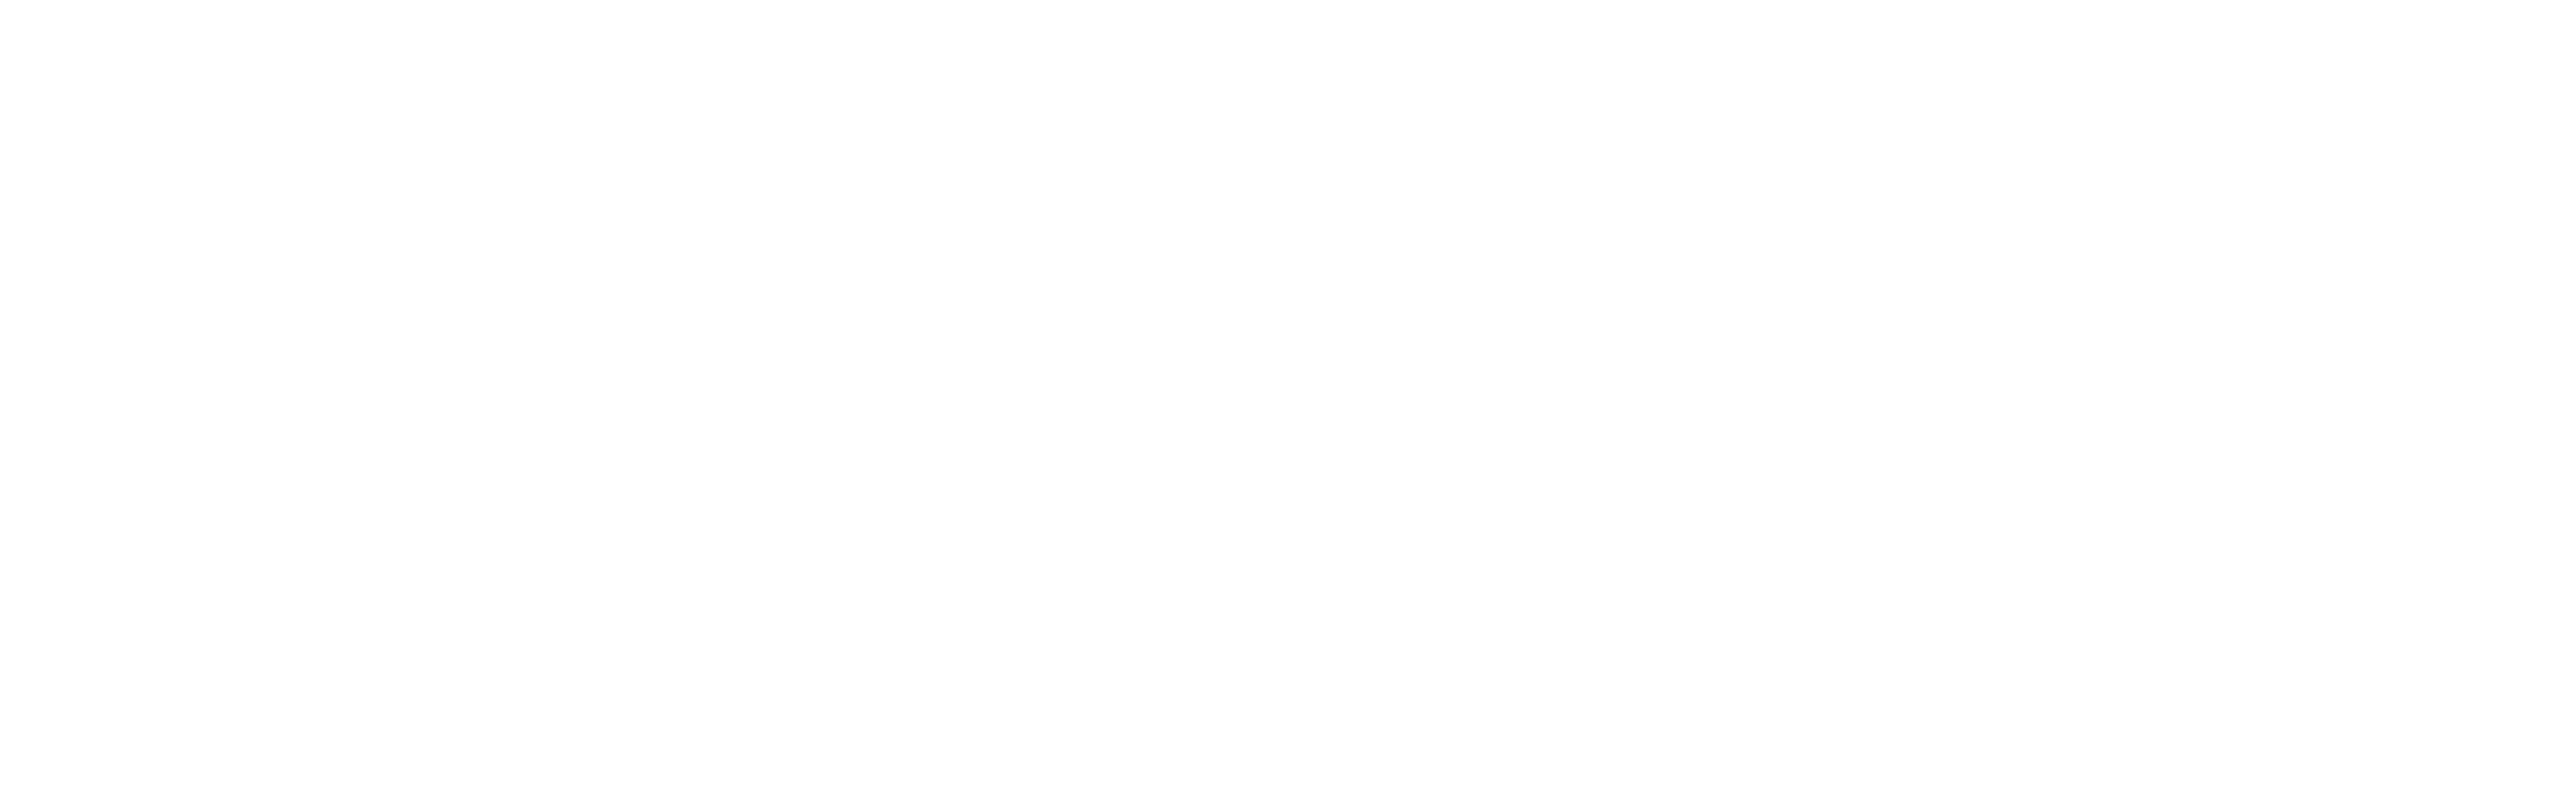 Oxford Hack 2019